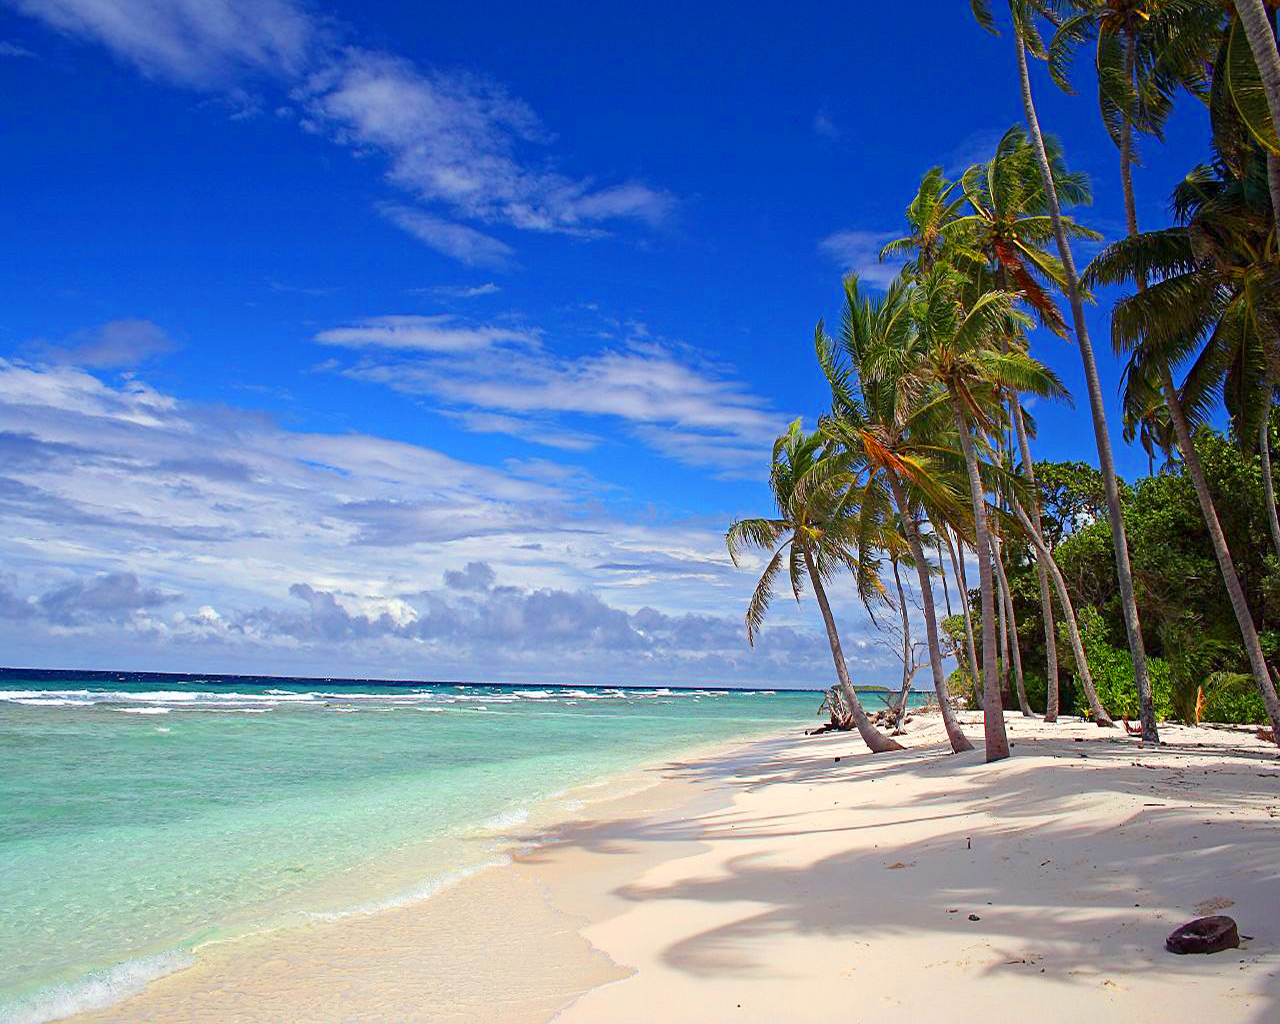 https://blogger.googleusercontent.com/img/b/R29vZ2xl/AVvXsEhsUCyLP_UA9e_DcG8CLkMsExyQRO7oMYERoi4TxUh2KdxV29wfUK8bwI4gFiaxlucW6msDD1IiR7Xn0YOa1d1rBuvV8a4tORQYdmyZAORaykqMC5mEkbPIQSYNNRLvfbXQMM2T7GqhC9k/s1600/Kiribati+beach.jpg